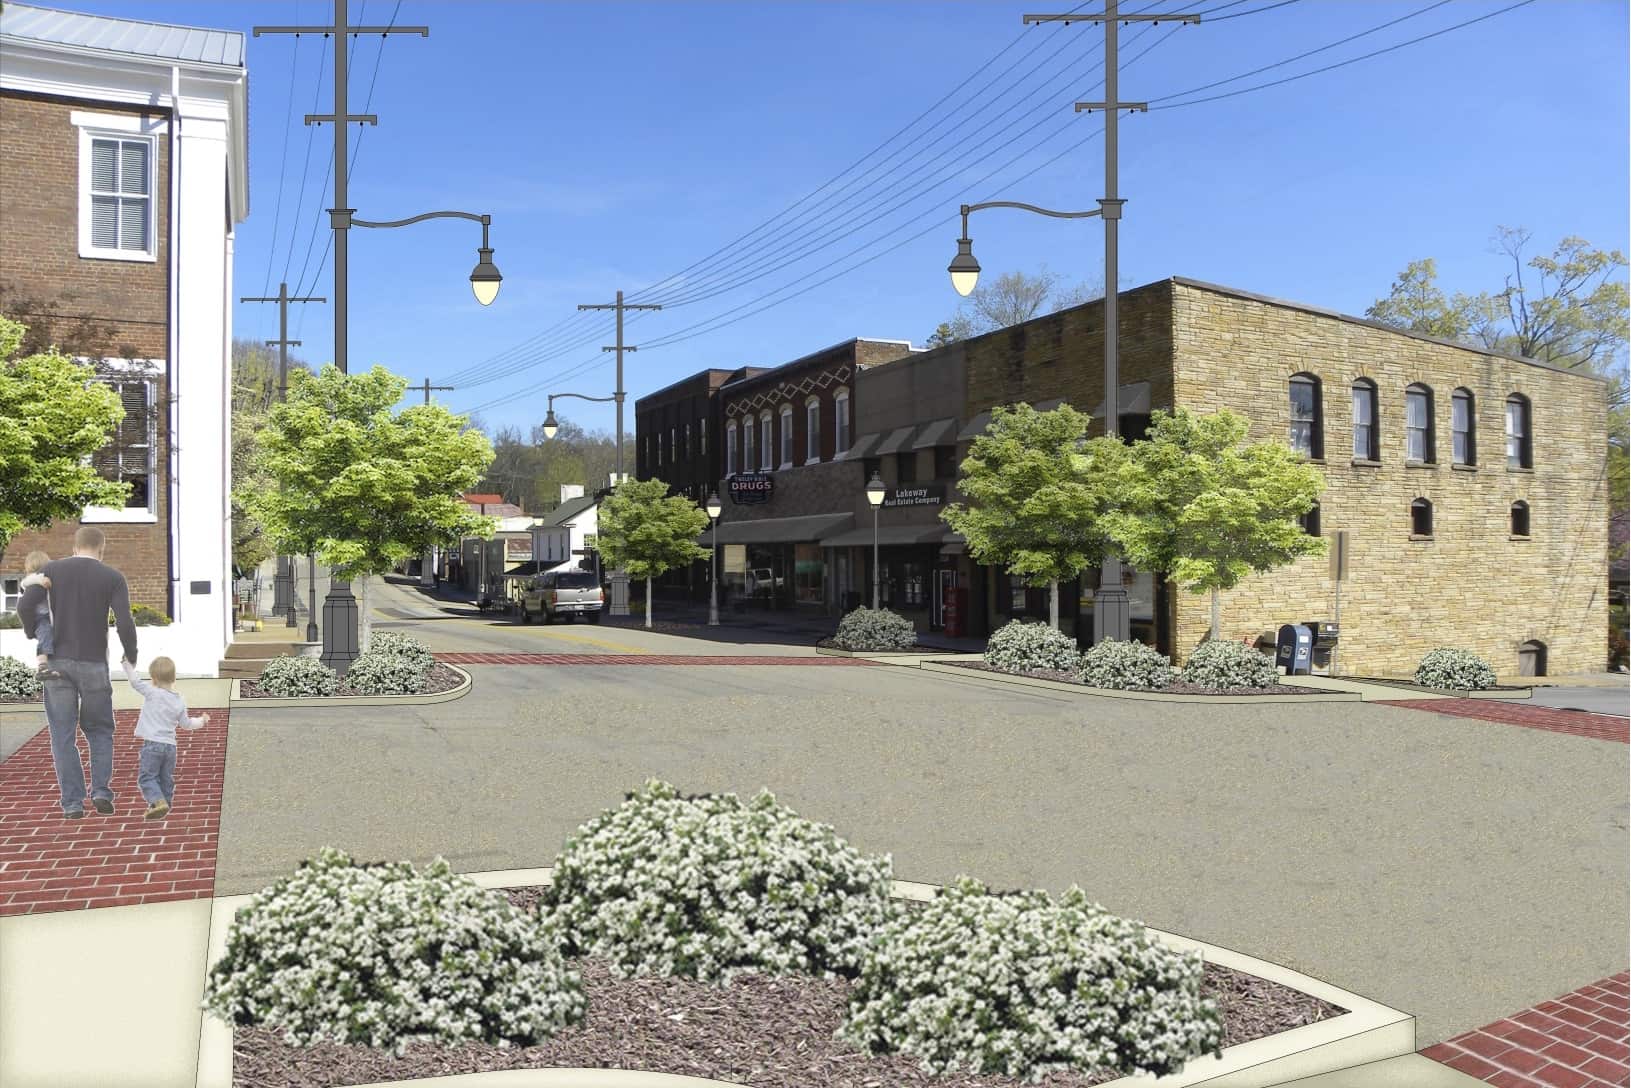 Featured image for “Dandridge Streetscape Plan”